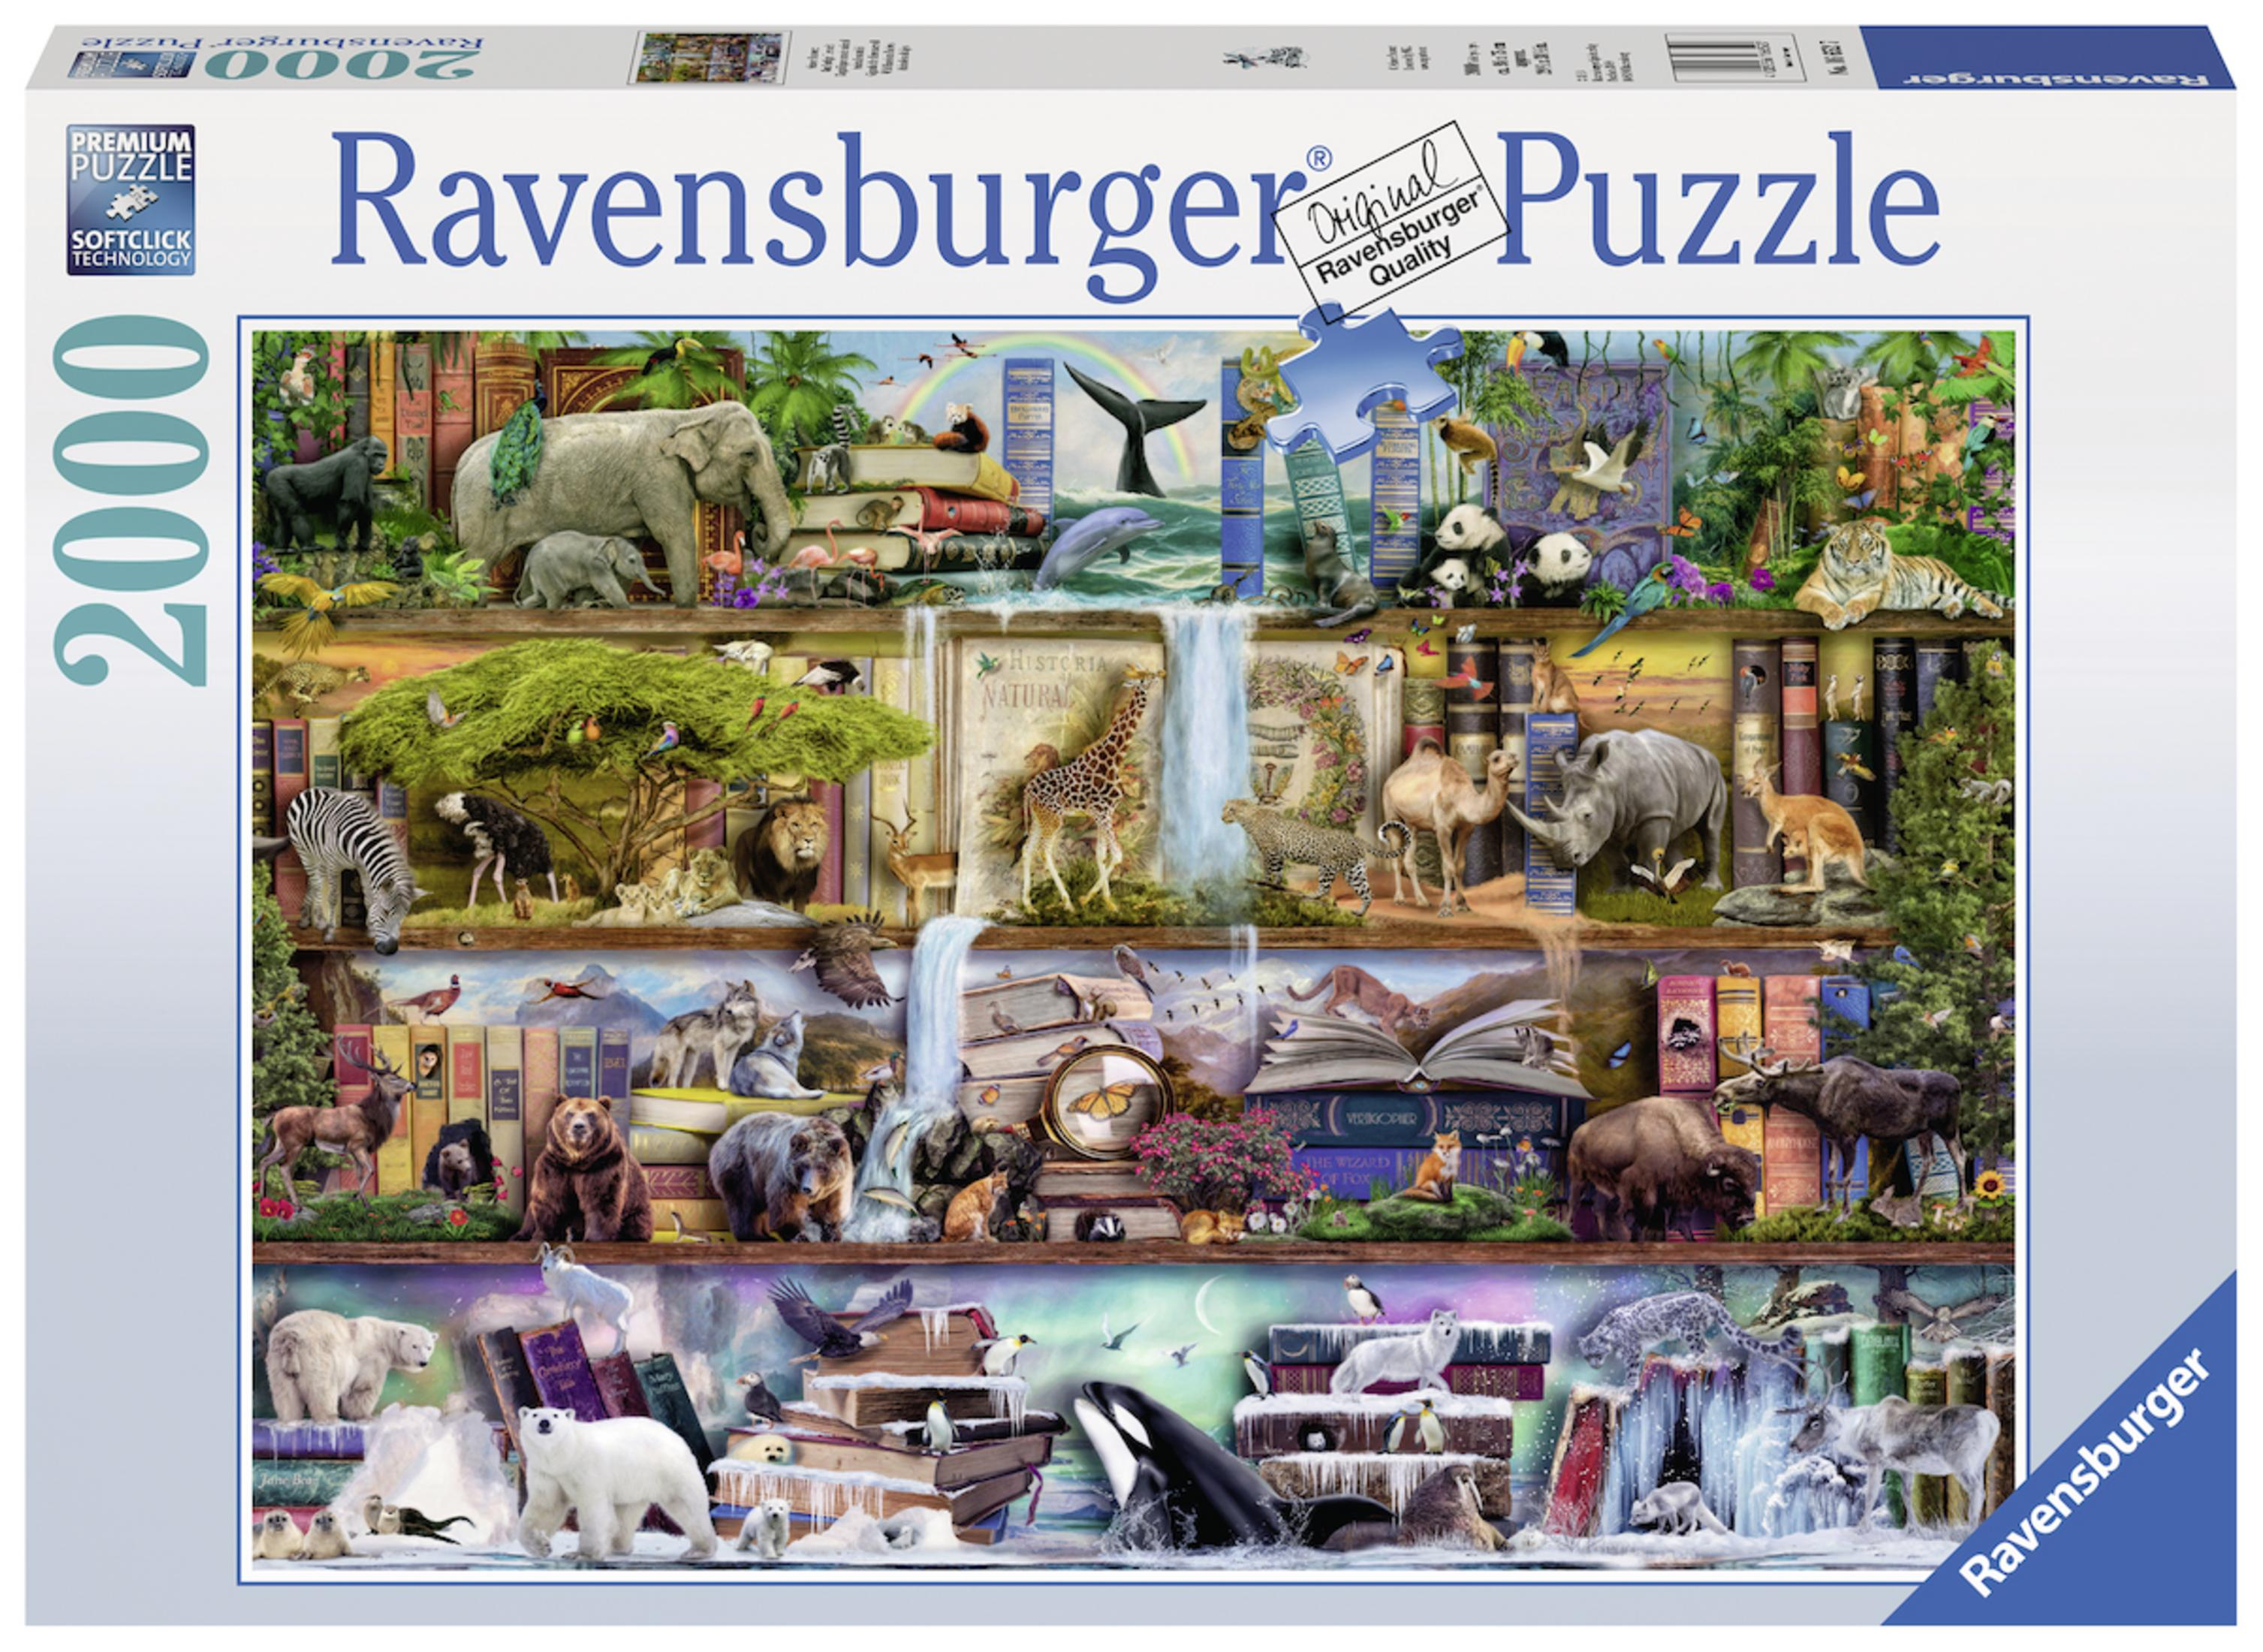 RAVENSBURGER Puzzle 16652 STEWART-GROSSARTIGE AIMEE TI